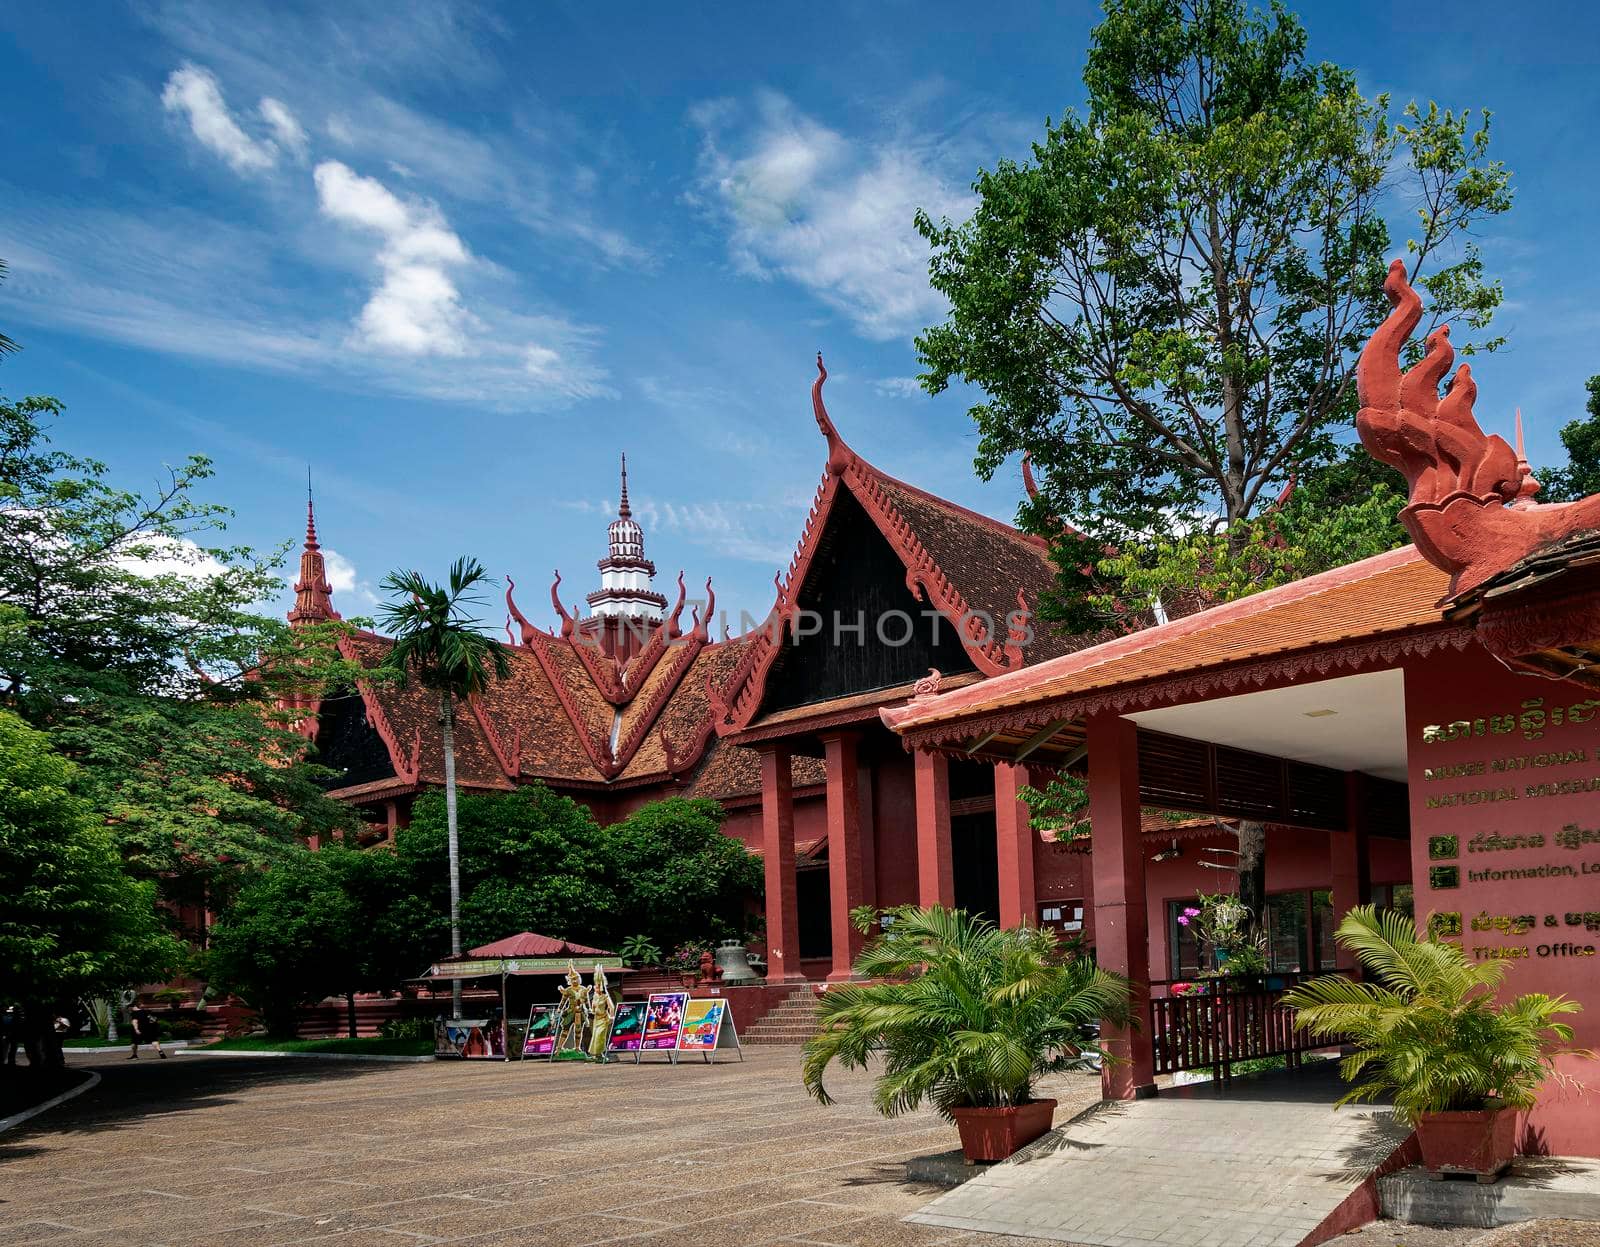 national museum landmark building exterior in phnom penh city cambodia by jackmalipan